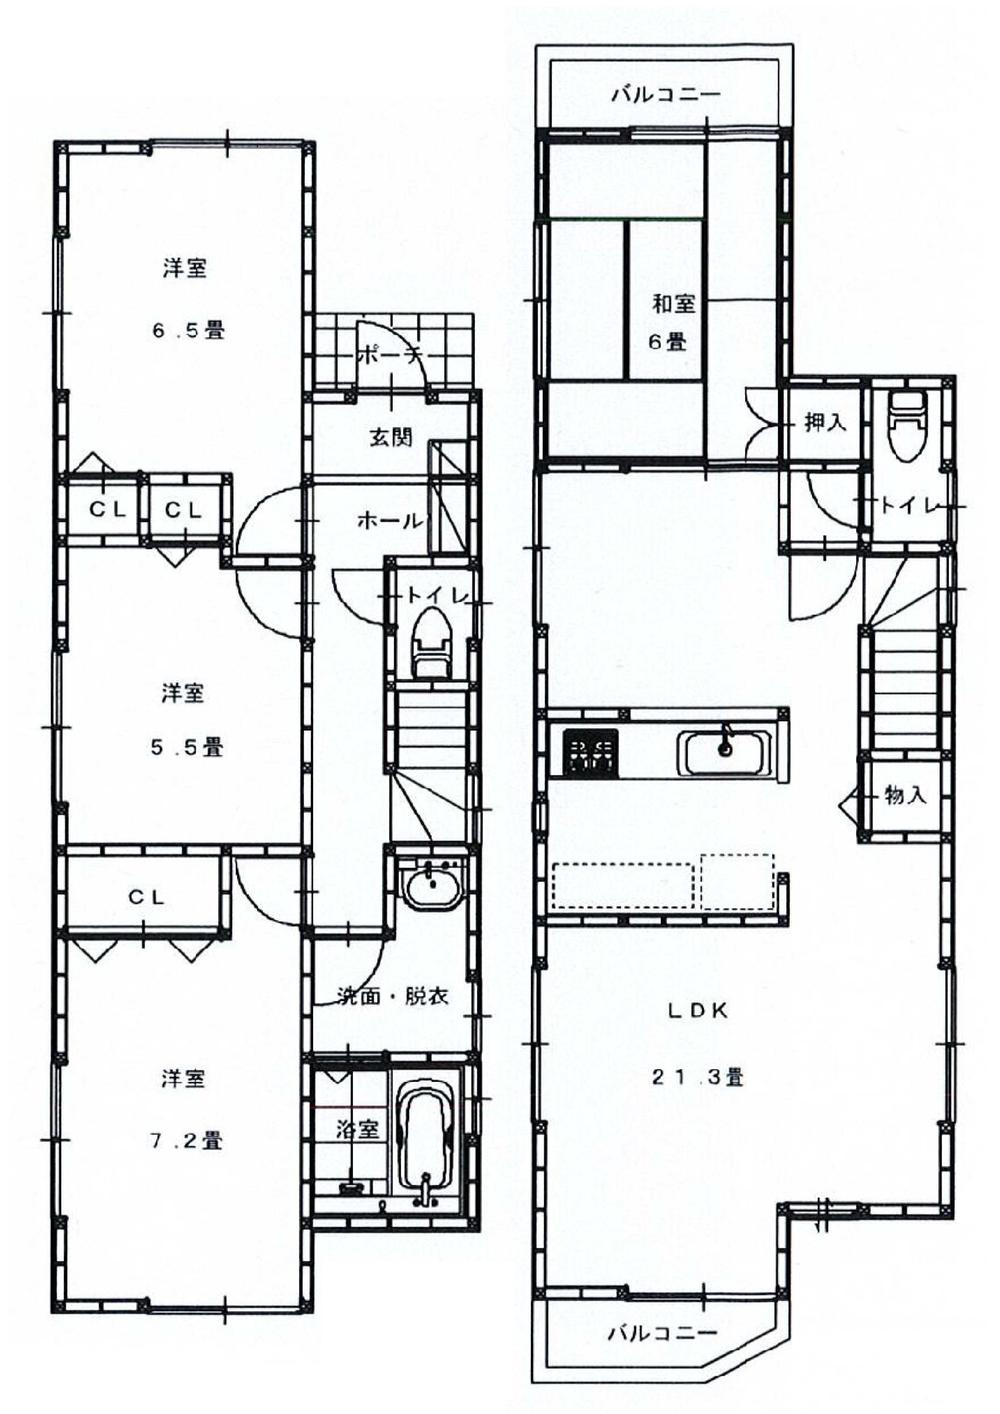 Building plan example (floor plan). Building plan example (9 Building) 4LDK, Land price 21,800,000 yen, Land area 107.26 sq m , Building price 15 million yen, Building area 102.68 sq m